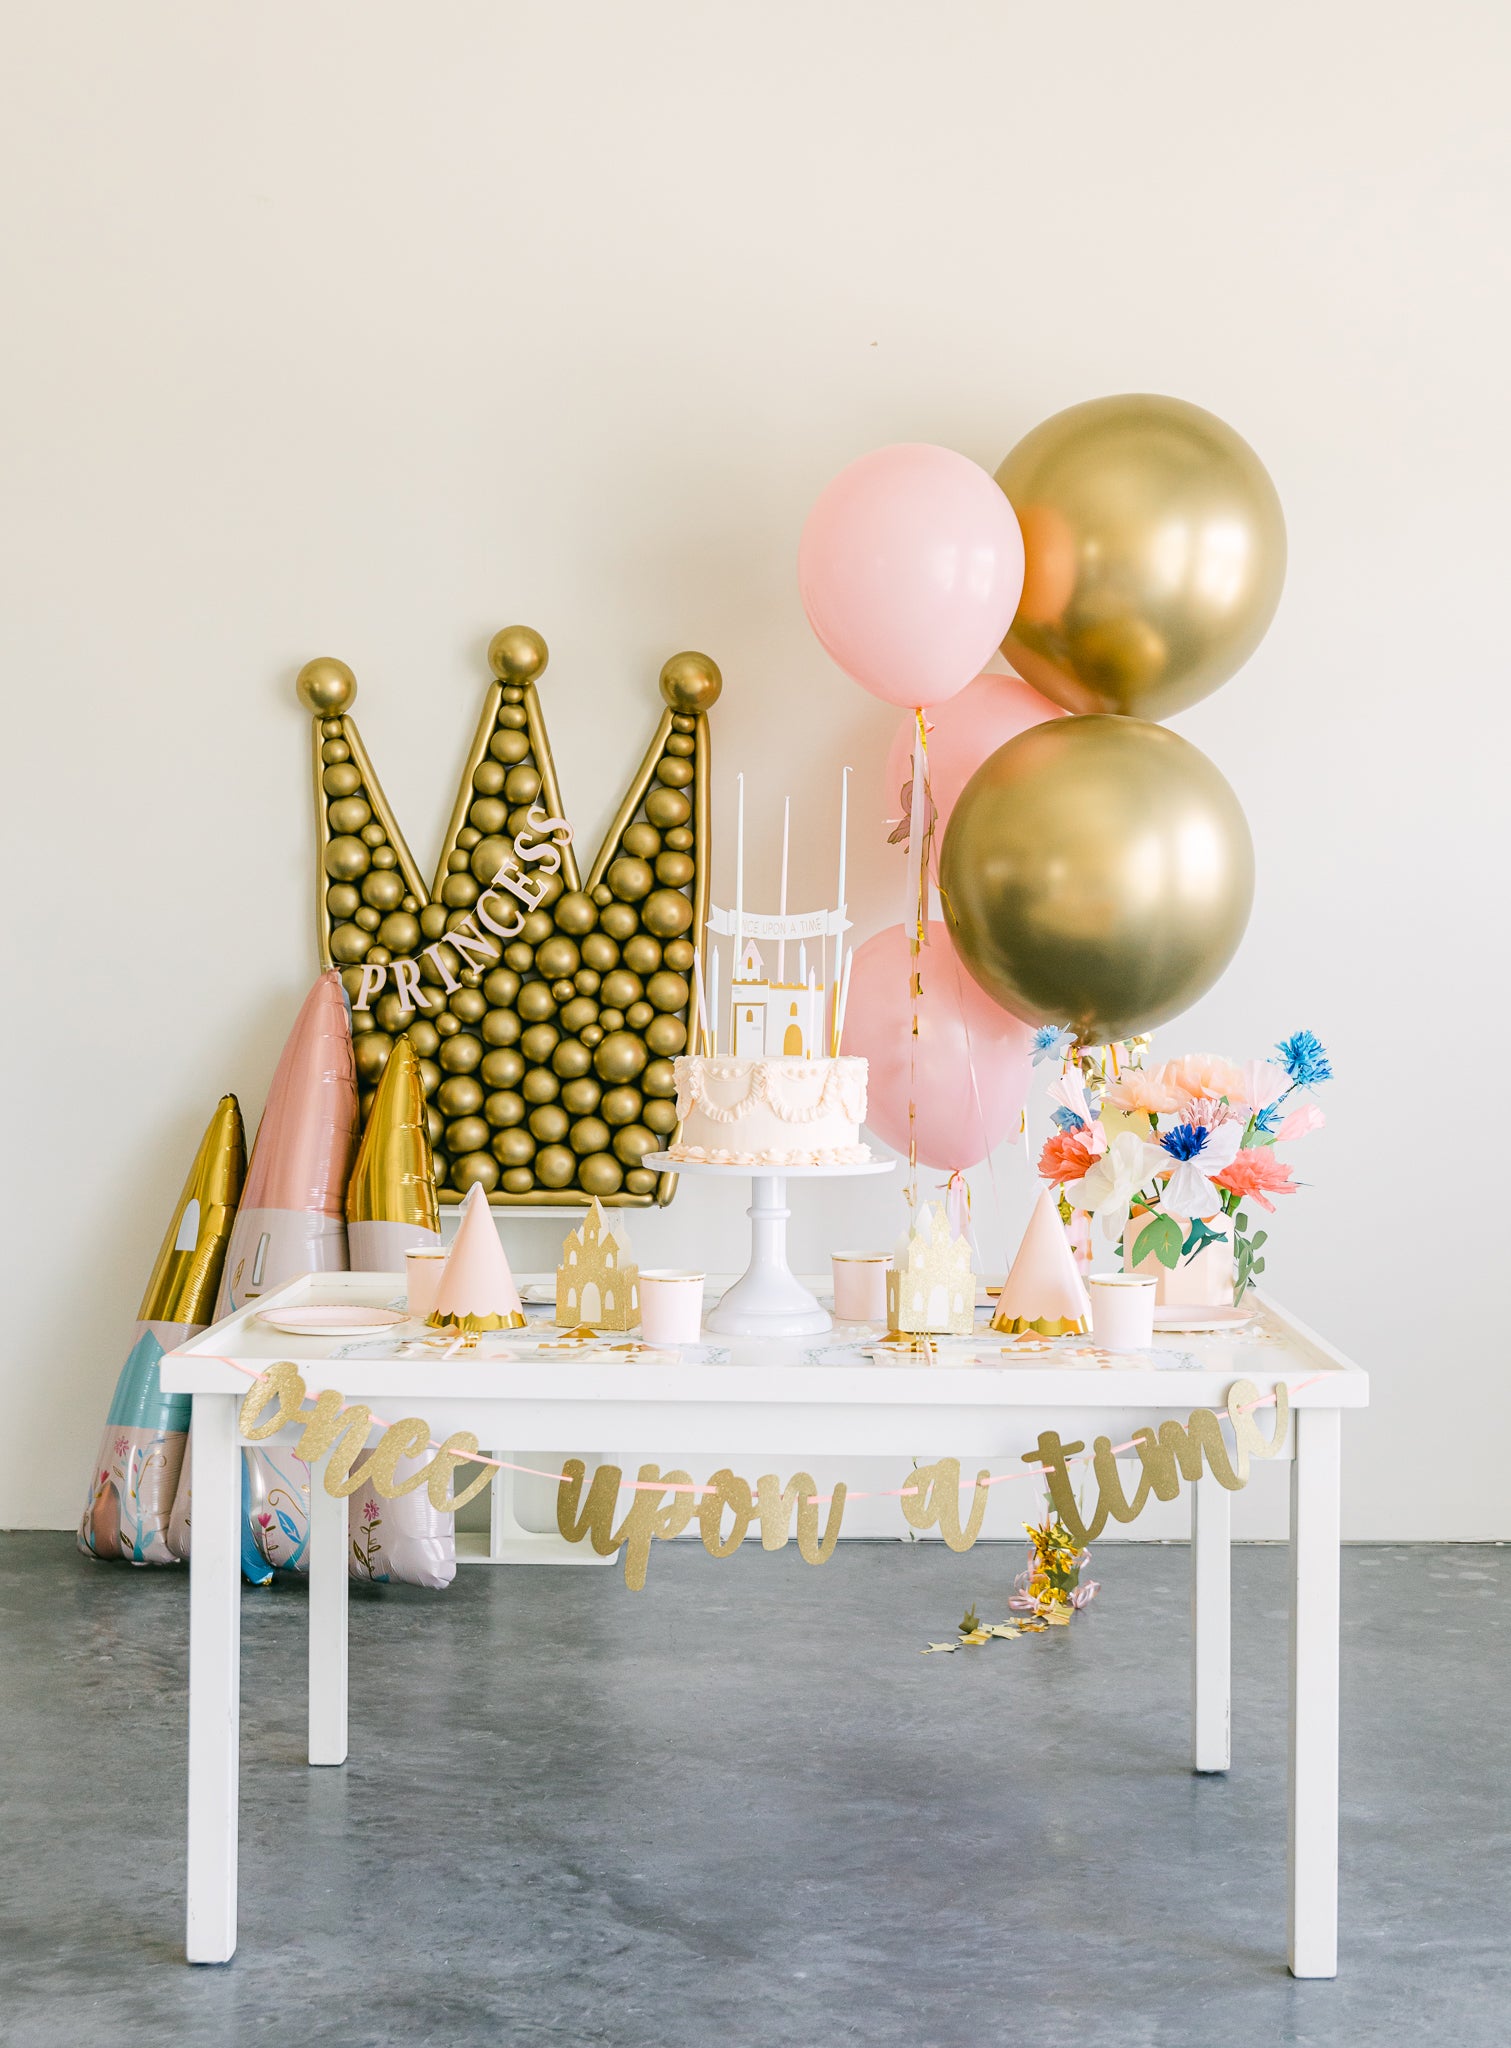 BEST PRINCESS BIRTHDAY PARTY IDEAS AND DECORATIONS – Bonjour Fête